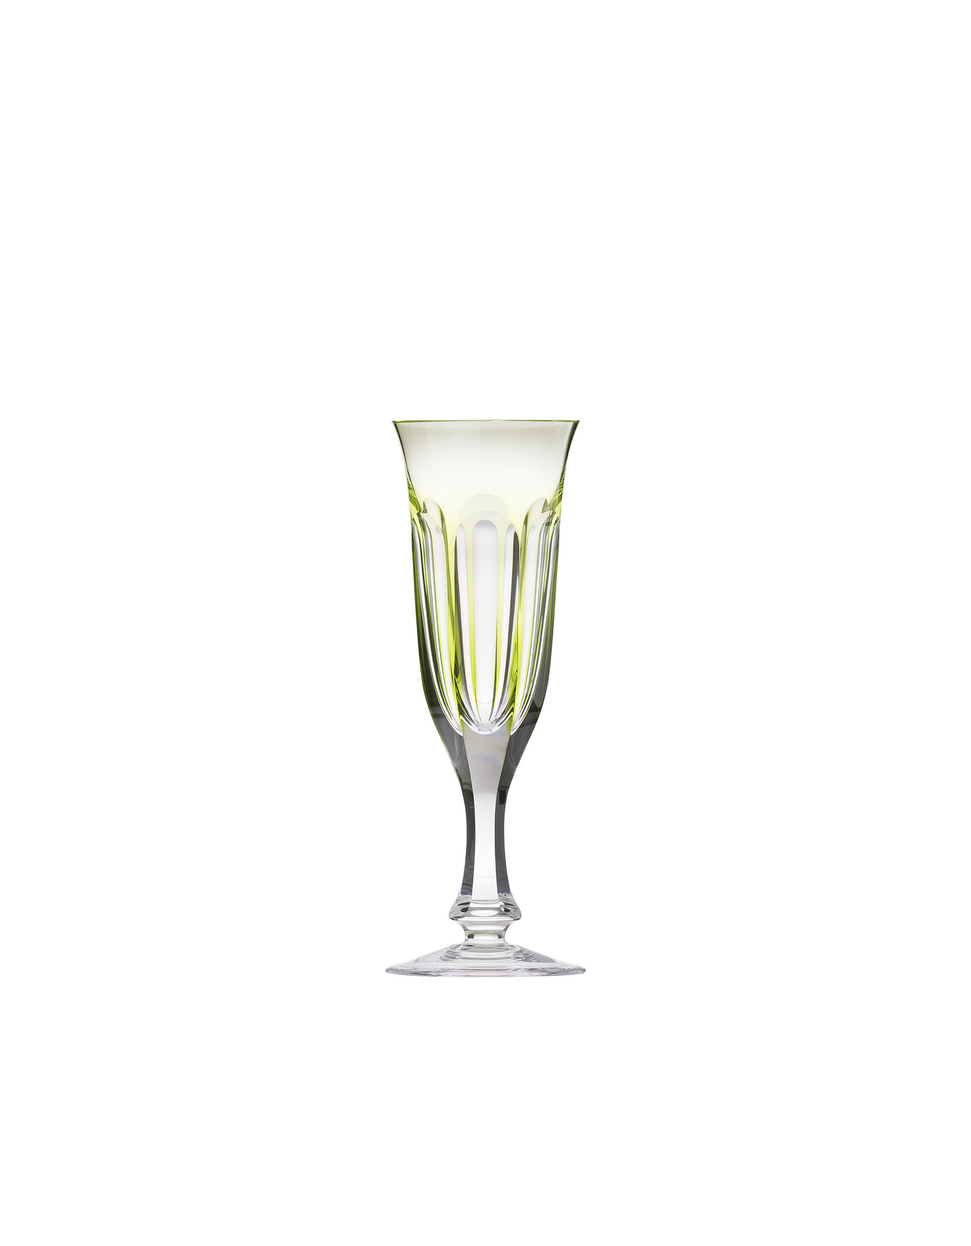 Lady Hamilton champagne glass, 140 ml